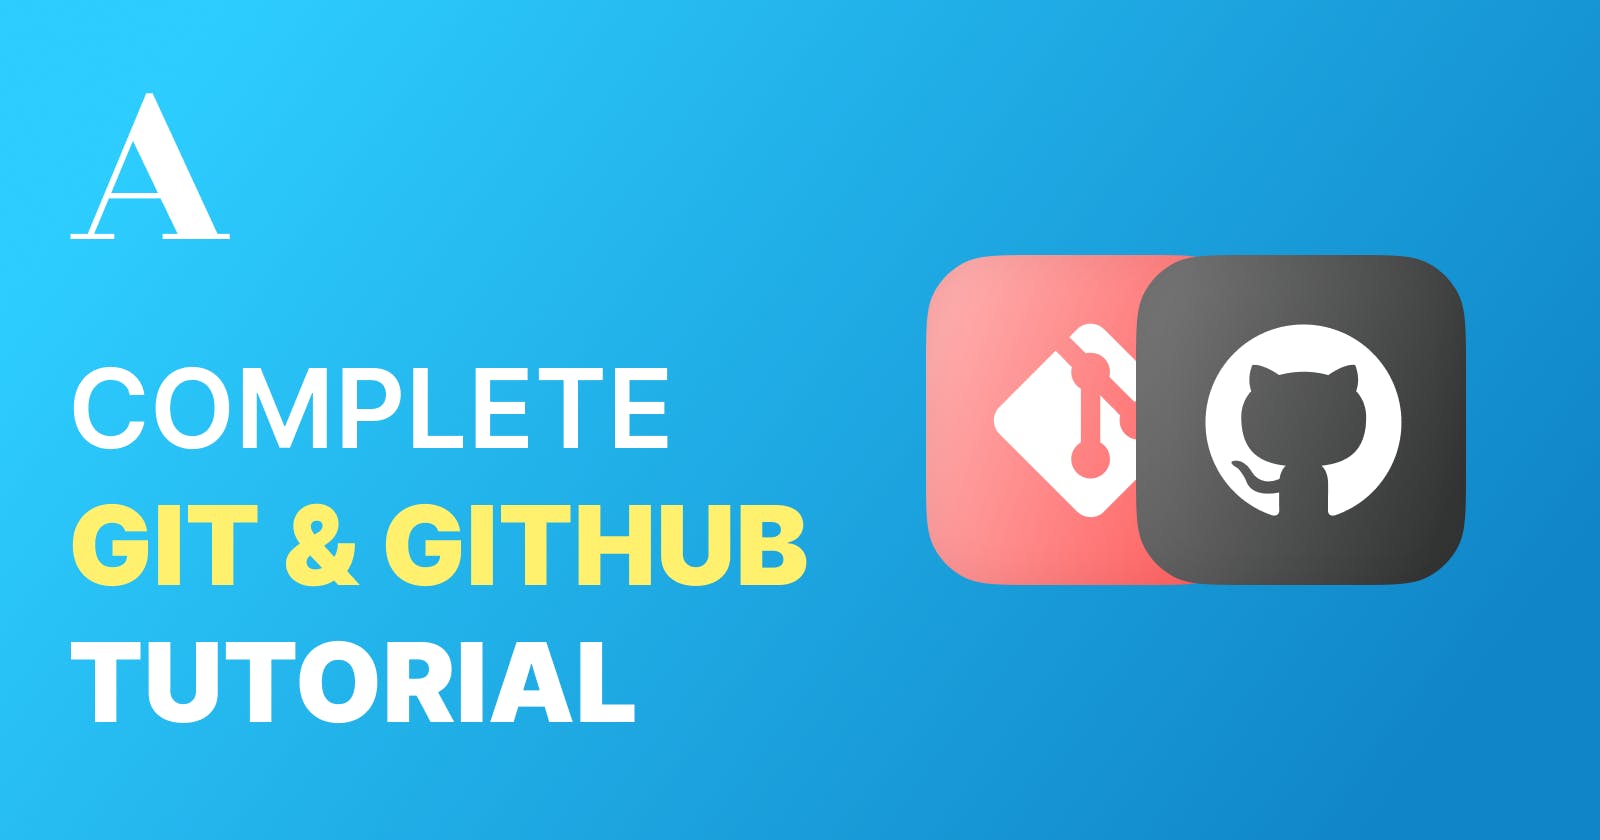 A Complete Git & GitHub Tutorial - Beginners